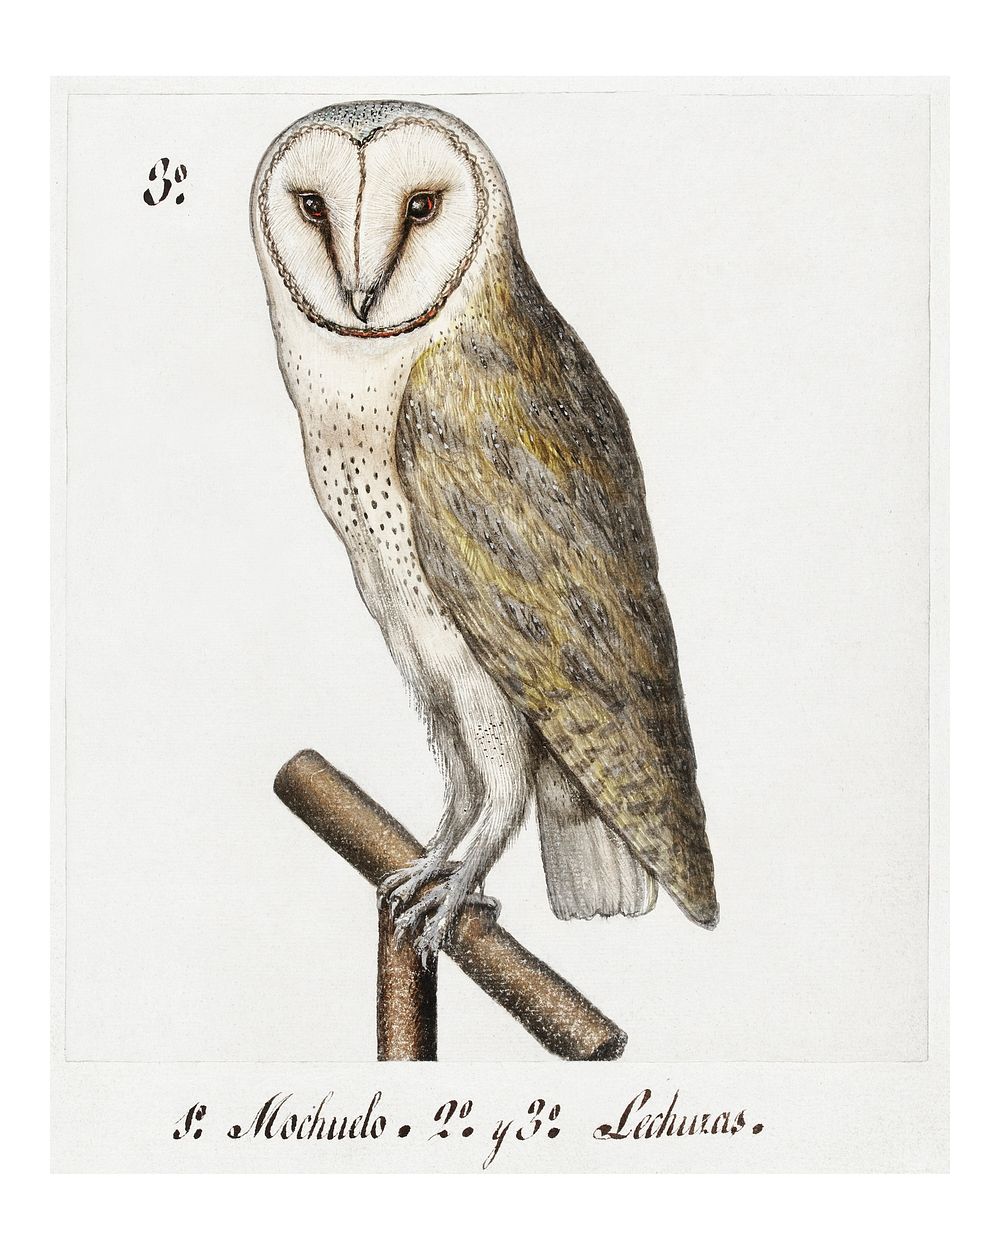 Barn owl vintage illustration wall art print and poster design remix from original artwork.